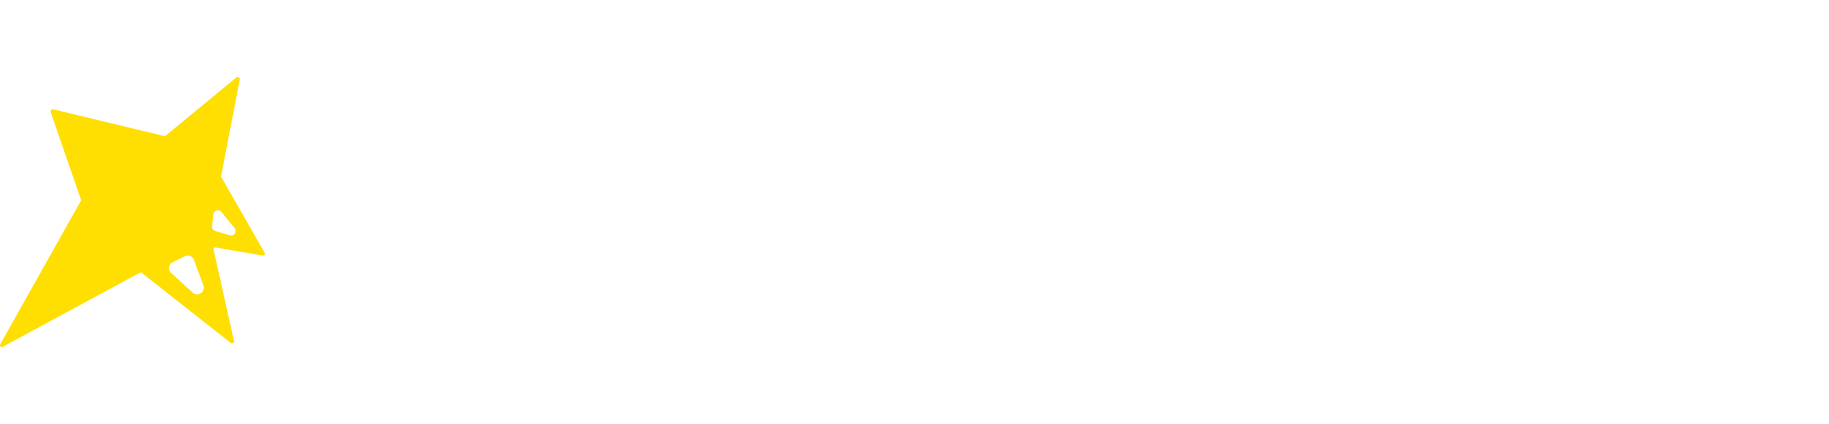 TRACKLife-logo-white.png